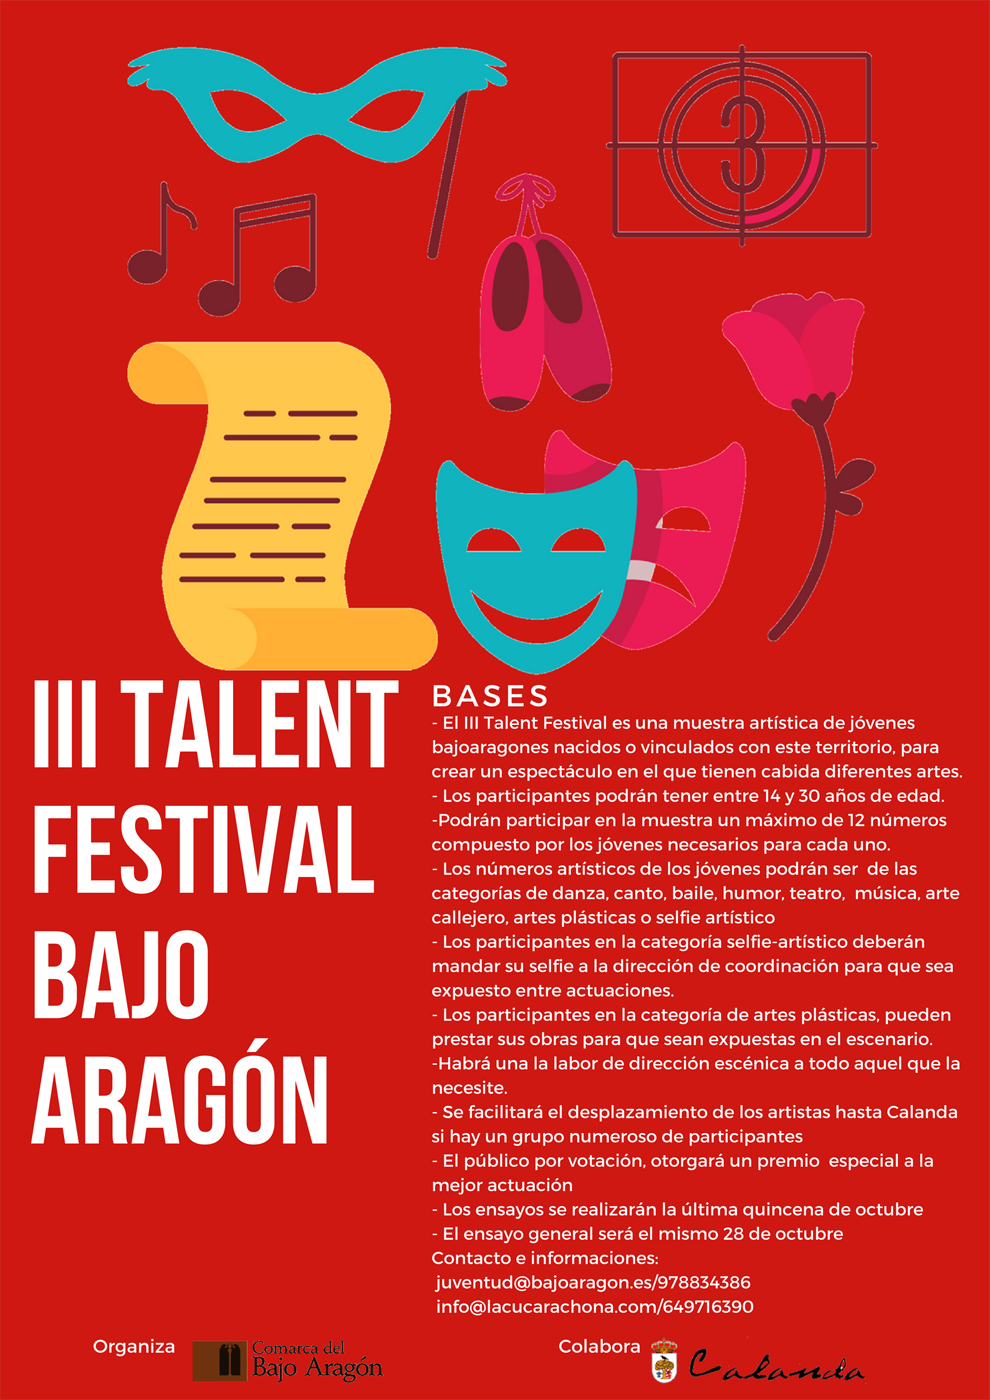 Talent Festival bases